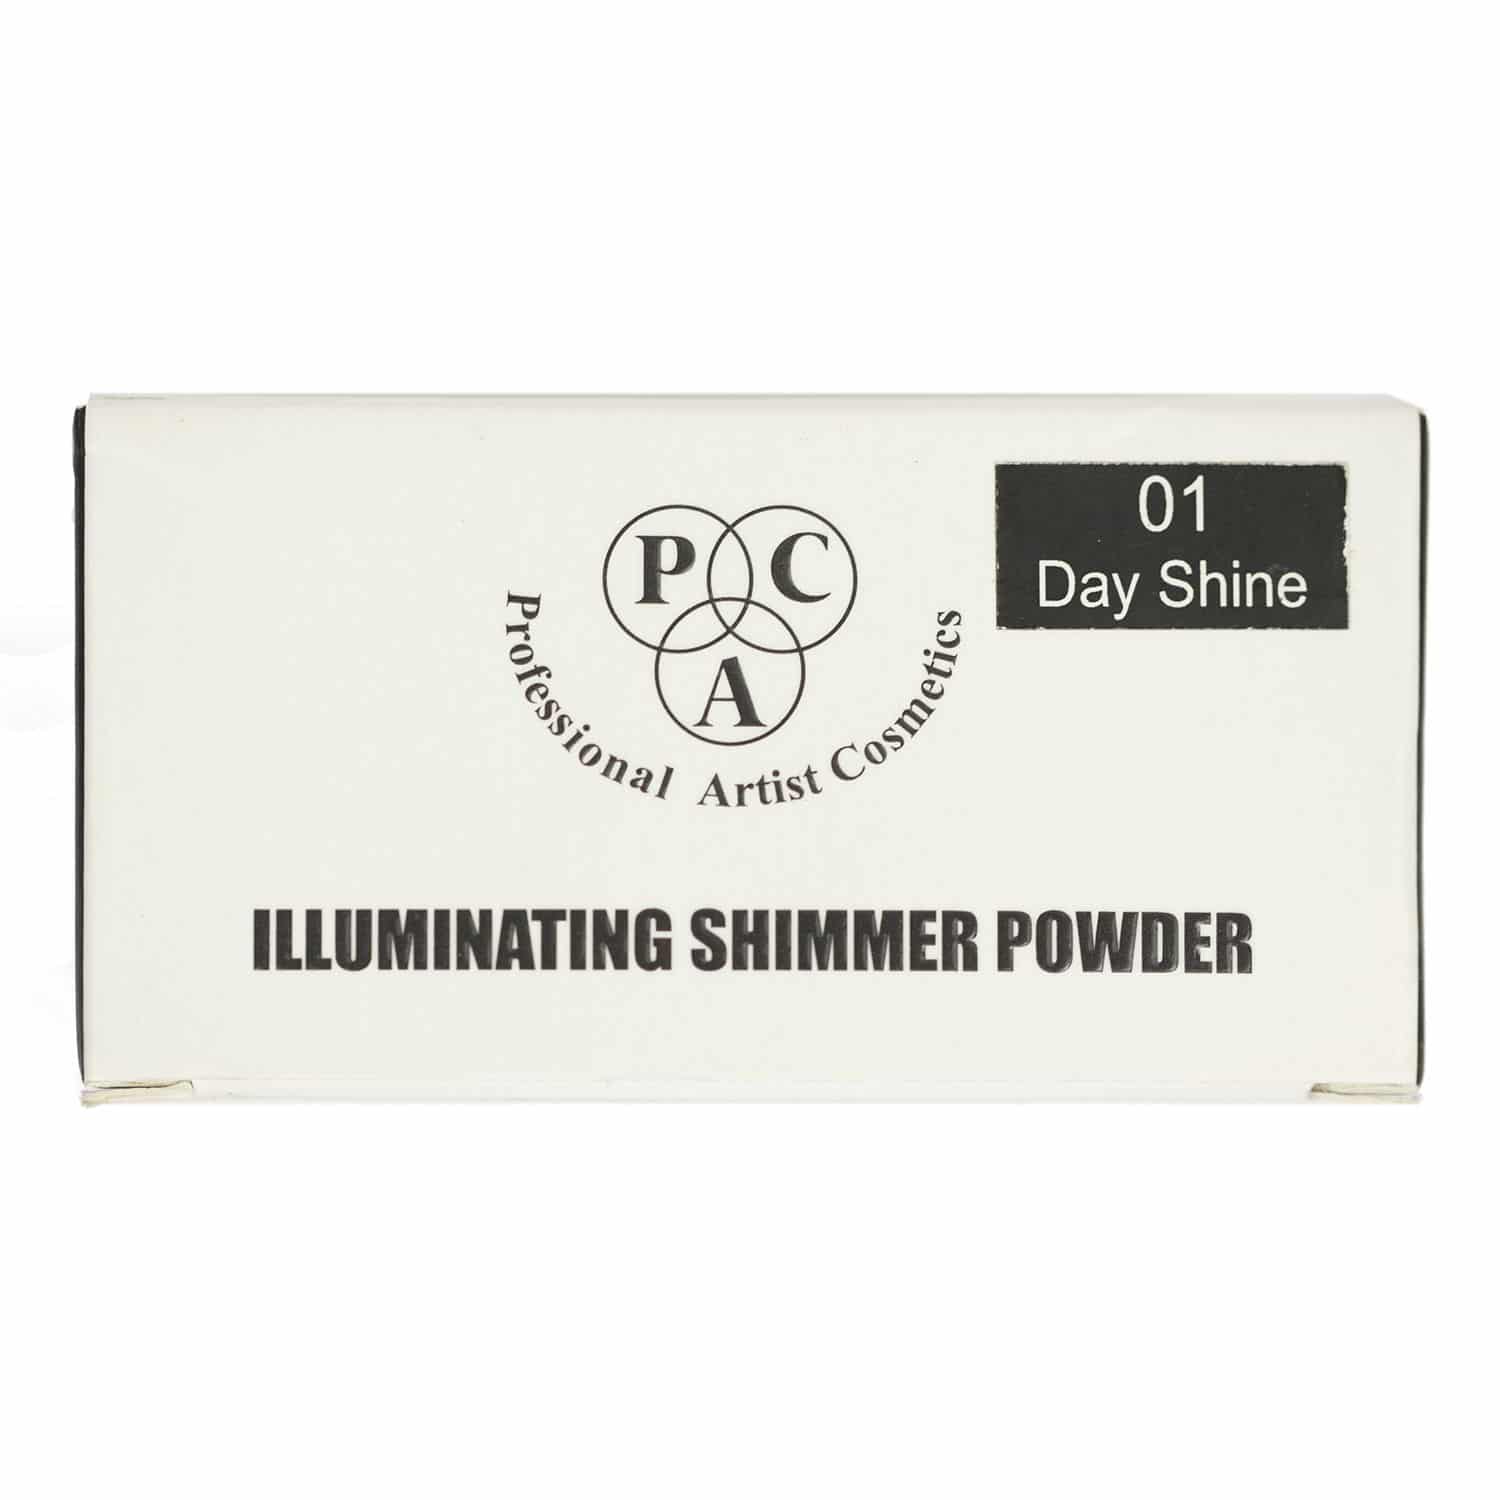 PAC Illuminating Shimmer Powder - 01 (Day Shine) PAC